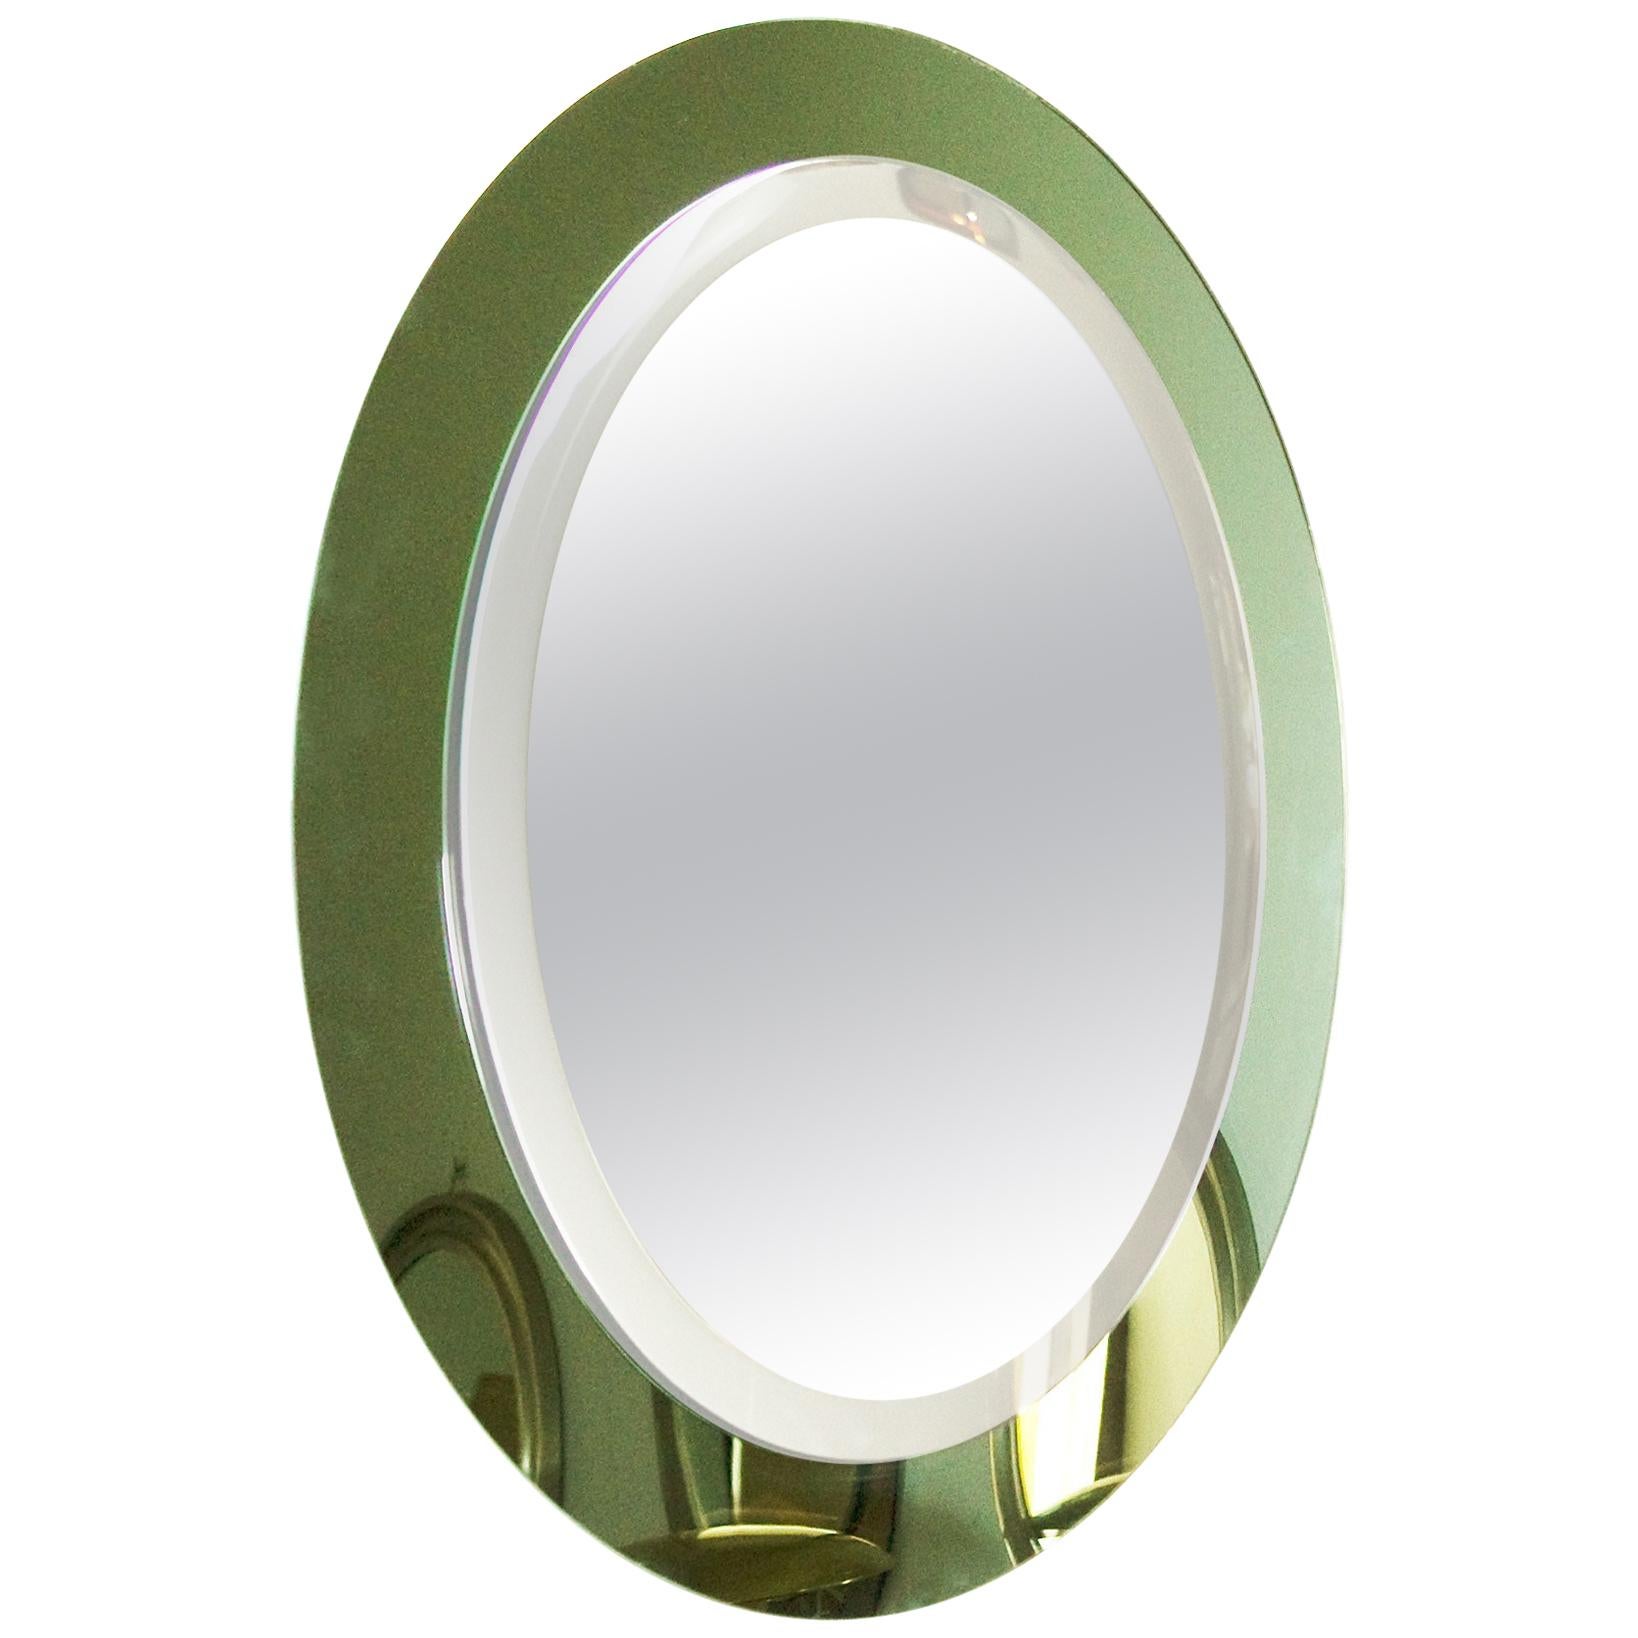 1960s Oval Back Beveled Mirror, Light Green Mirror Frame, Italy